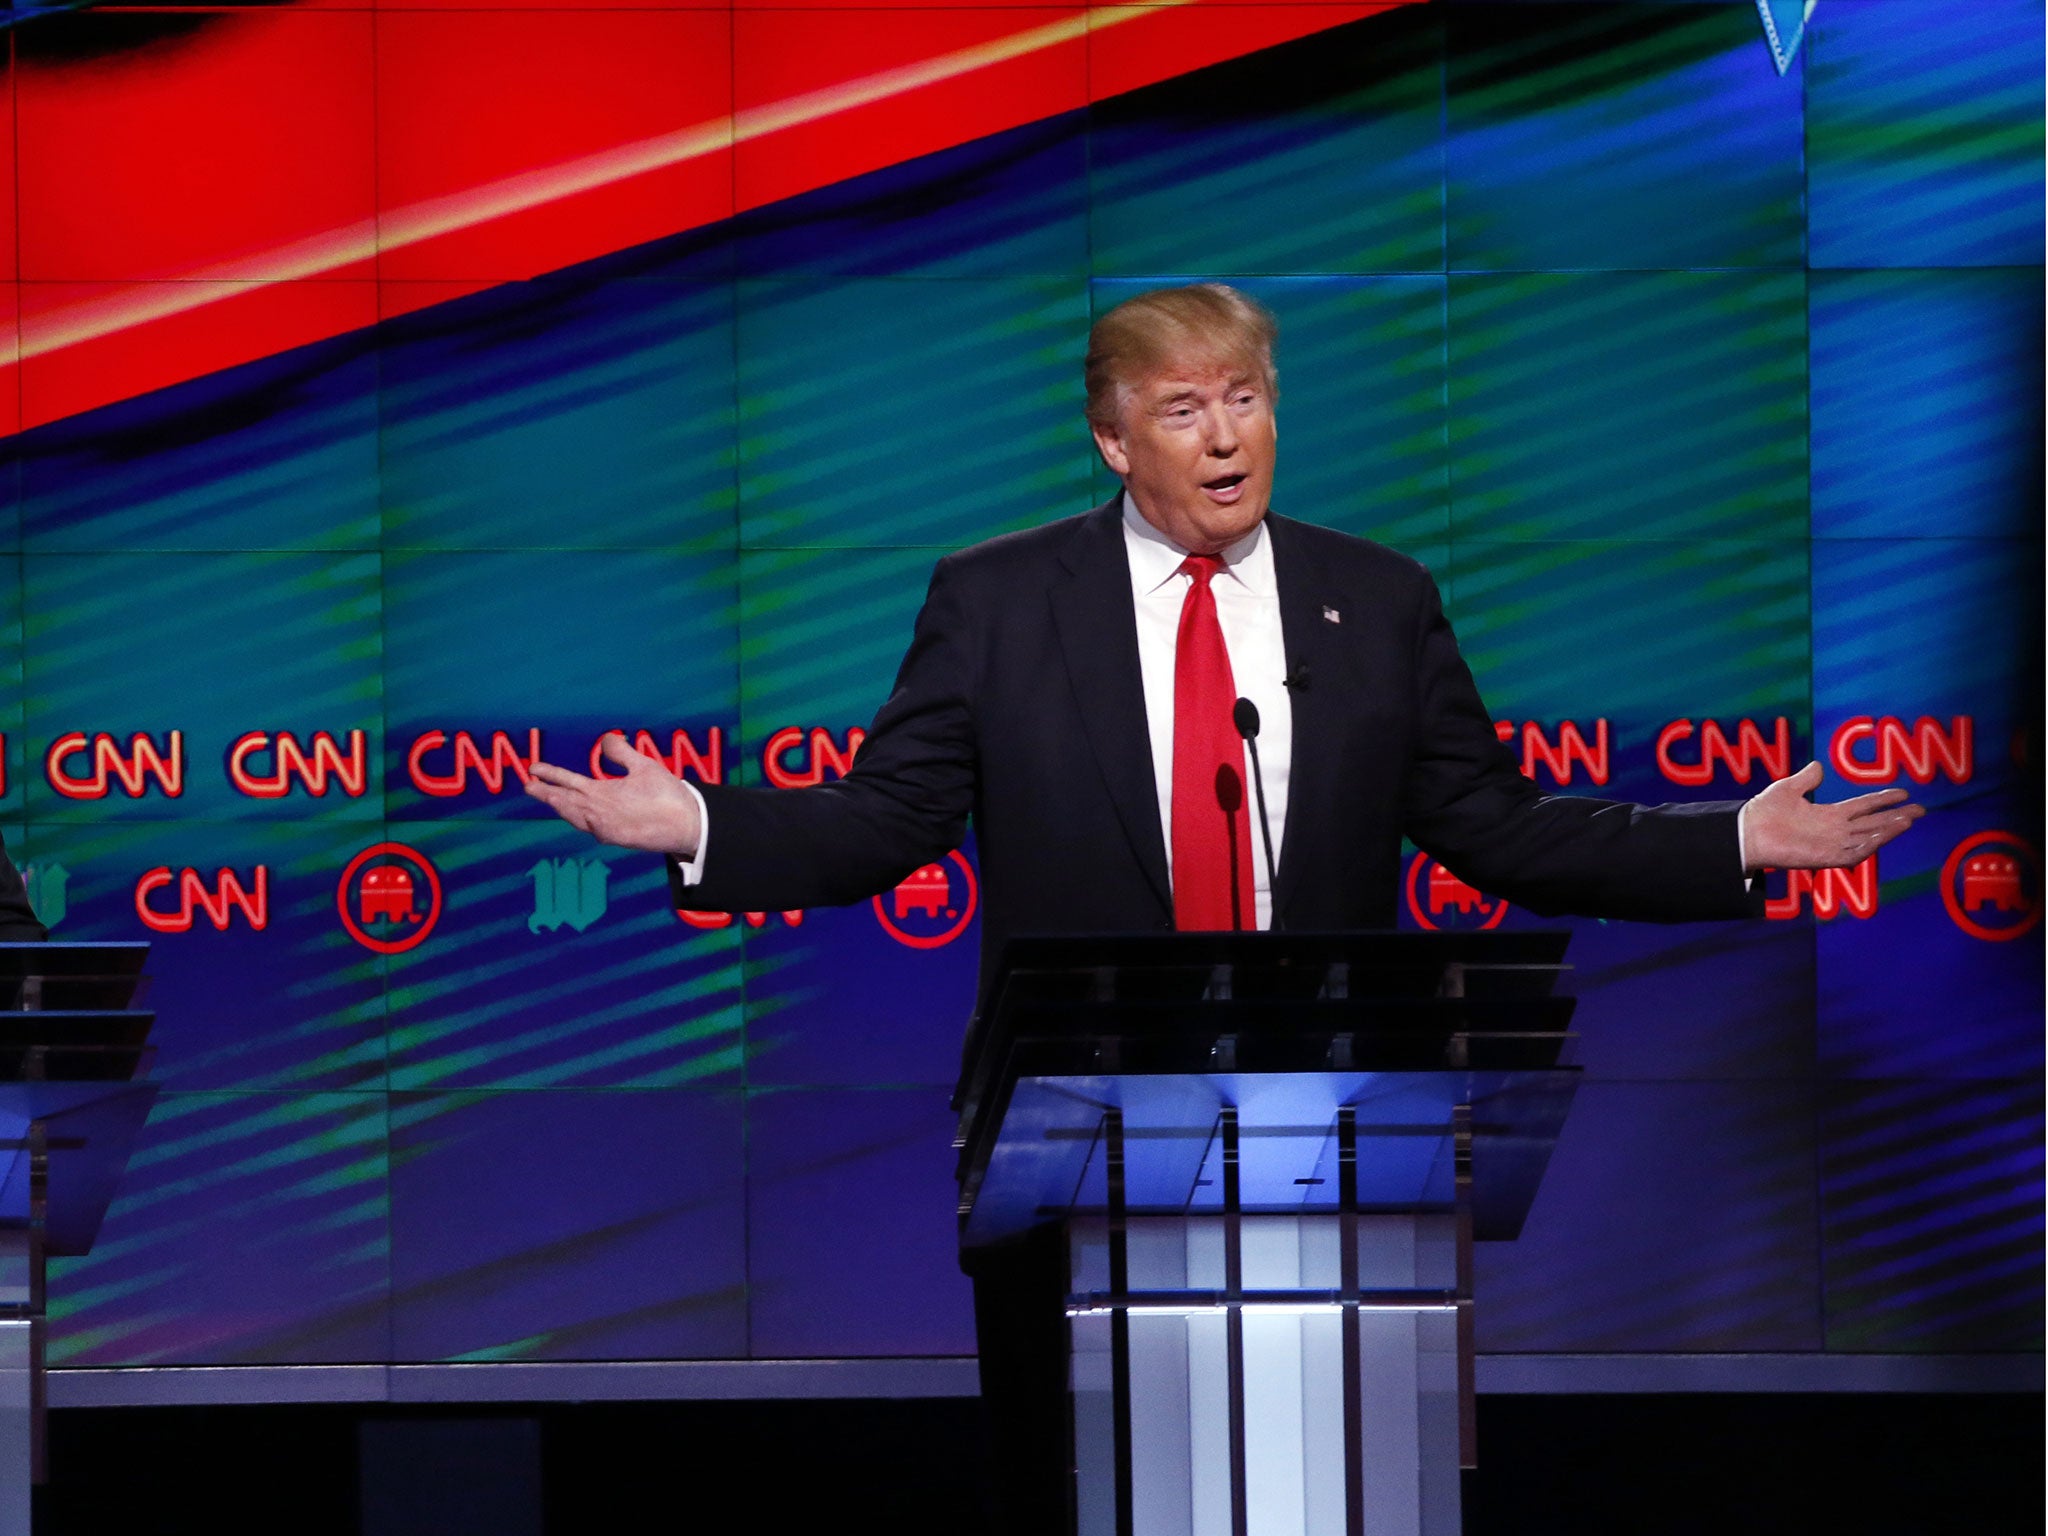 Republican presidential candidate Donald Trump speaks at Republican presidential debate at the University of Miami